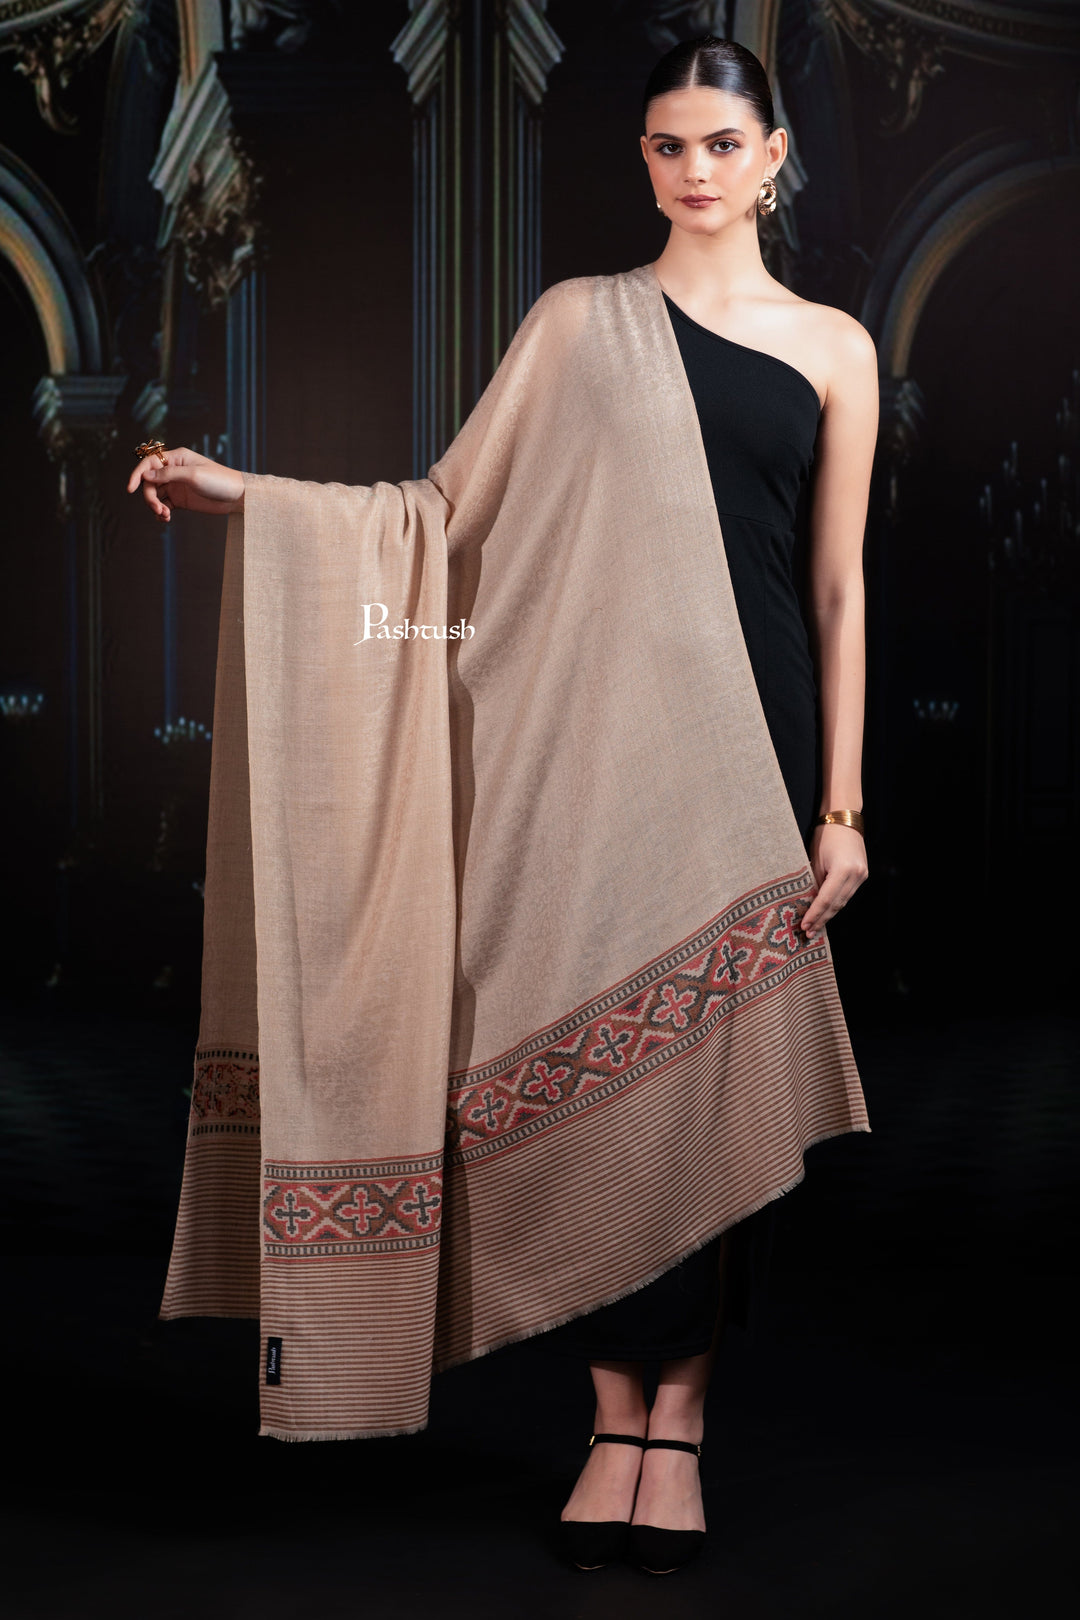 Pashtush India Womens Shawls Pashtush Womens Extra Fine Wool Shawl, Aztec Palla Design, Beige